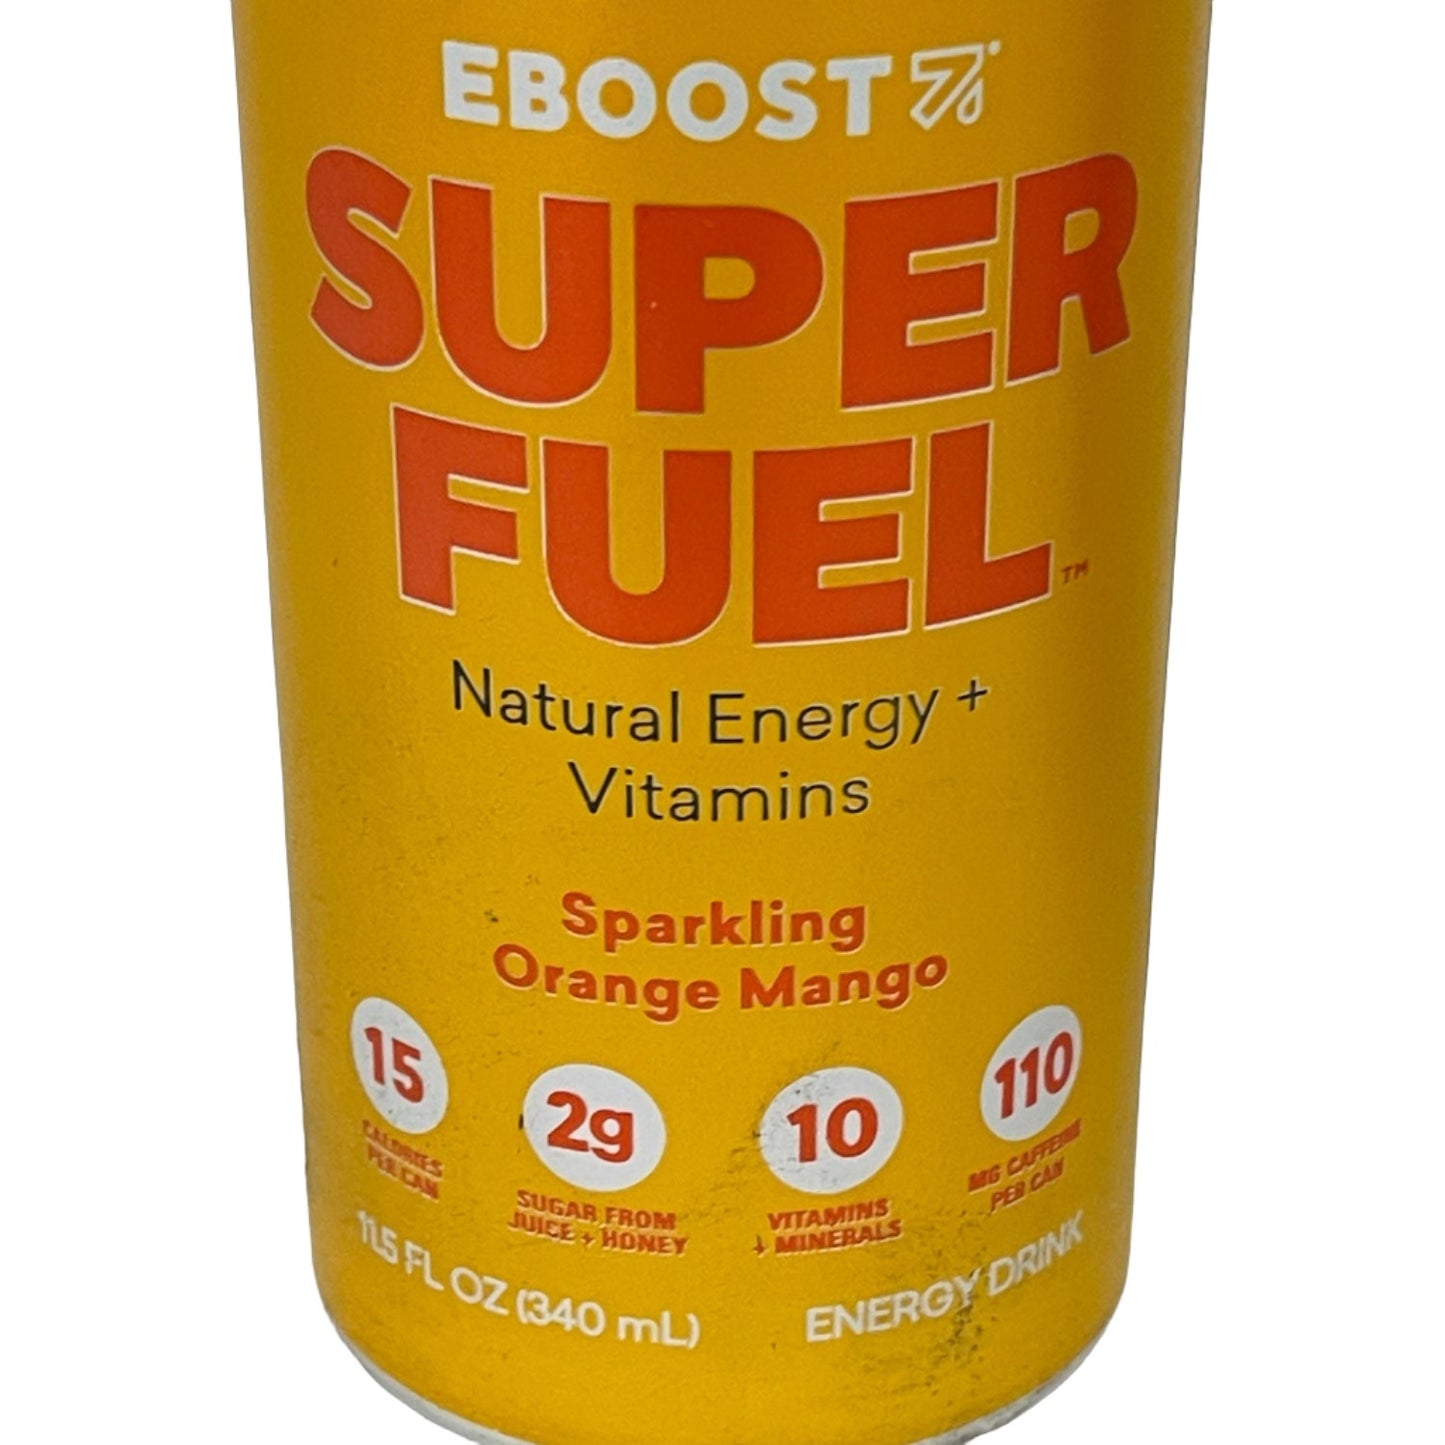 EBOOST Super Fuel Natural Energy Vitamins Sparkling Drinks 12x/ Case Orange Mango & Strawberry Lemonade Shelf Stable (as-is) Best By: 7/24